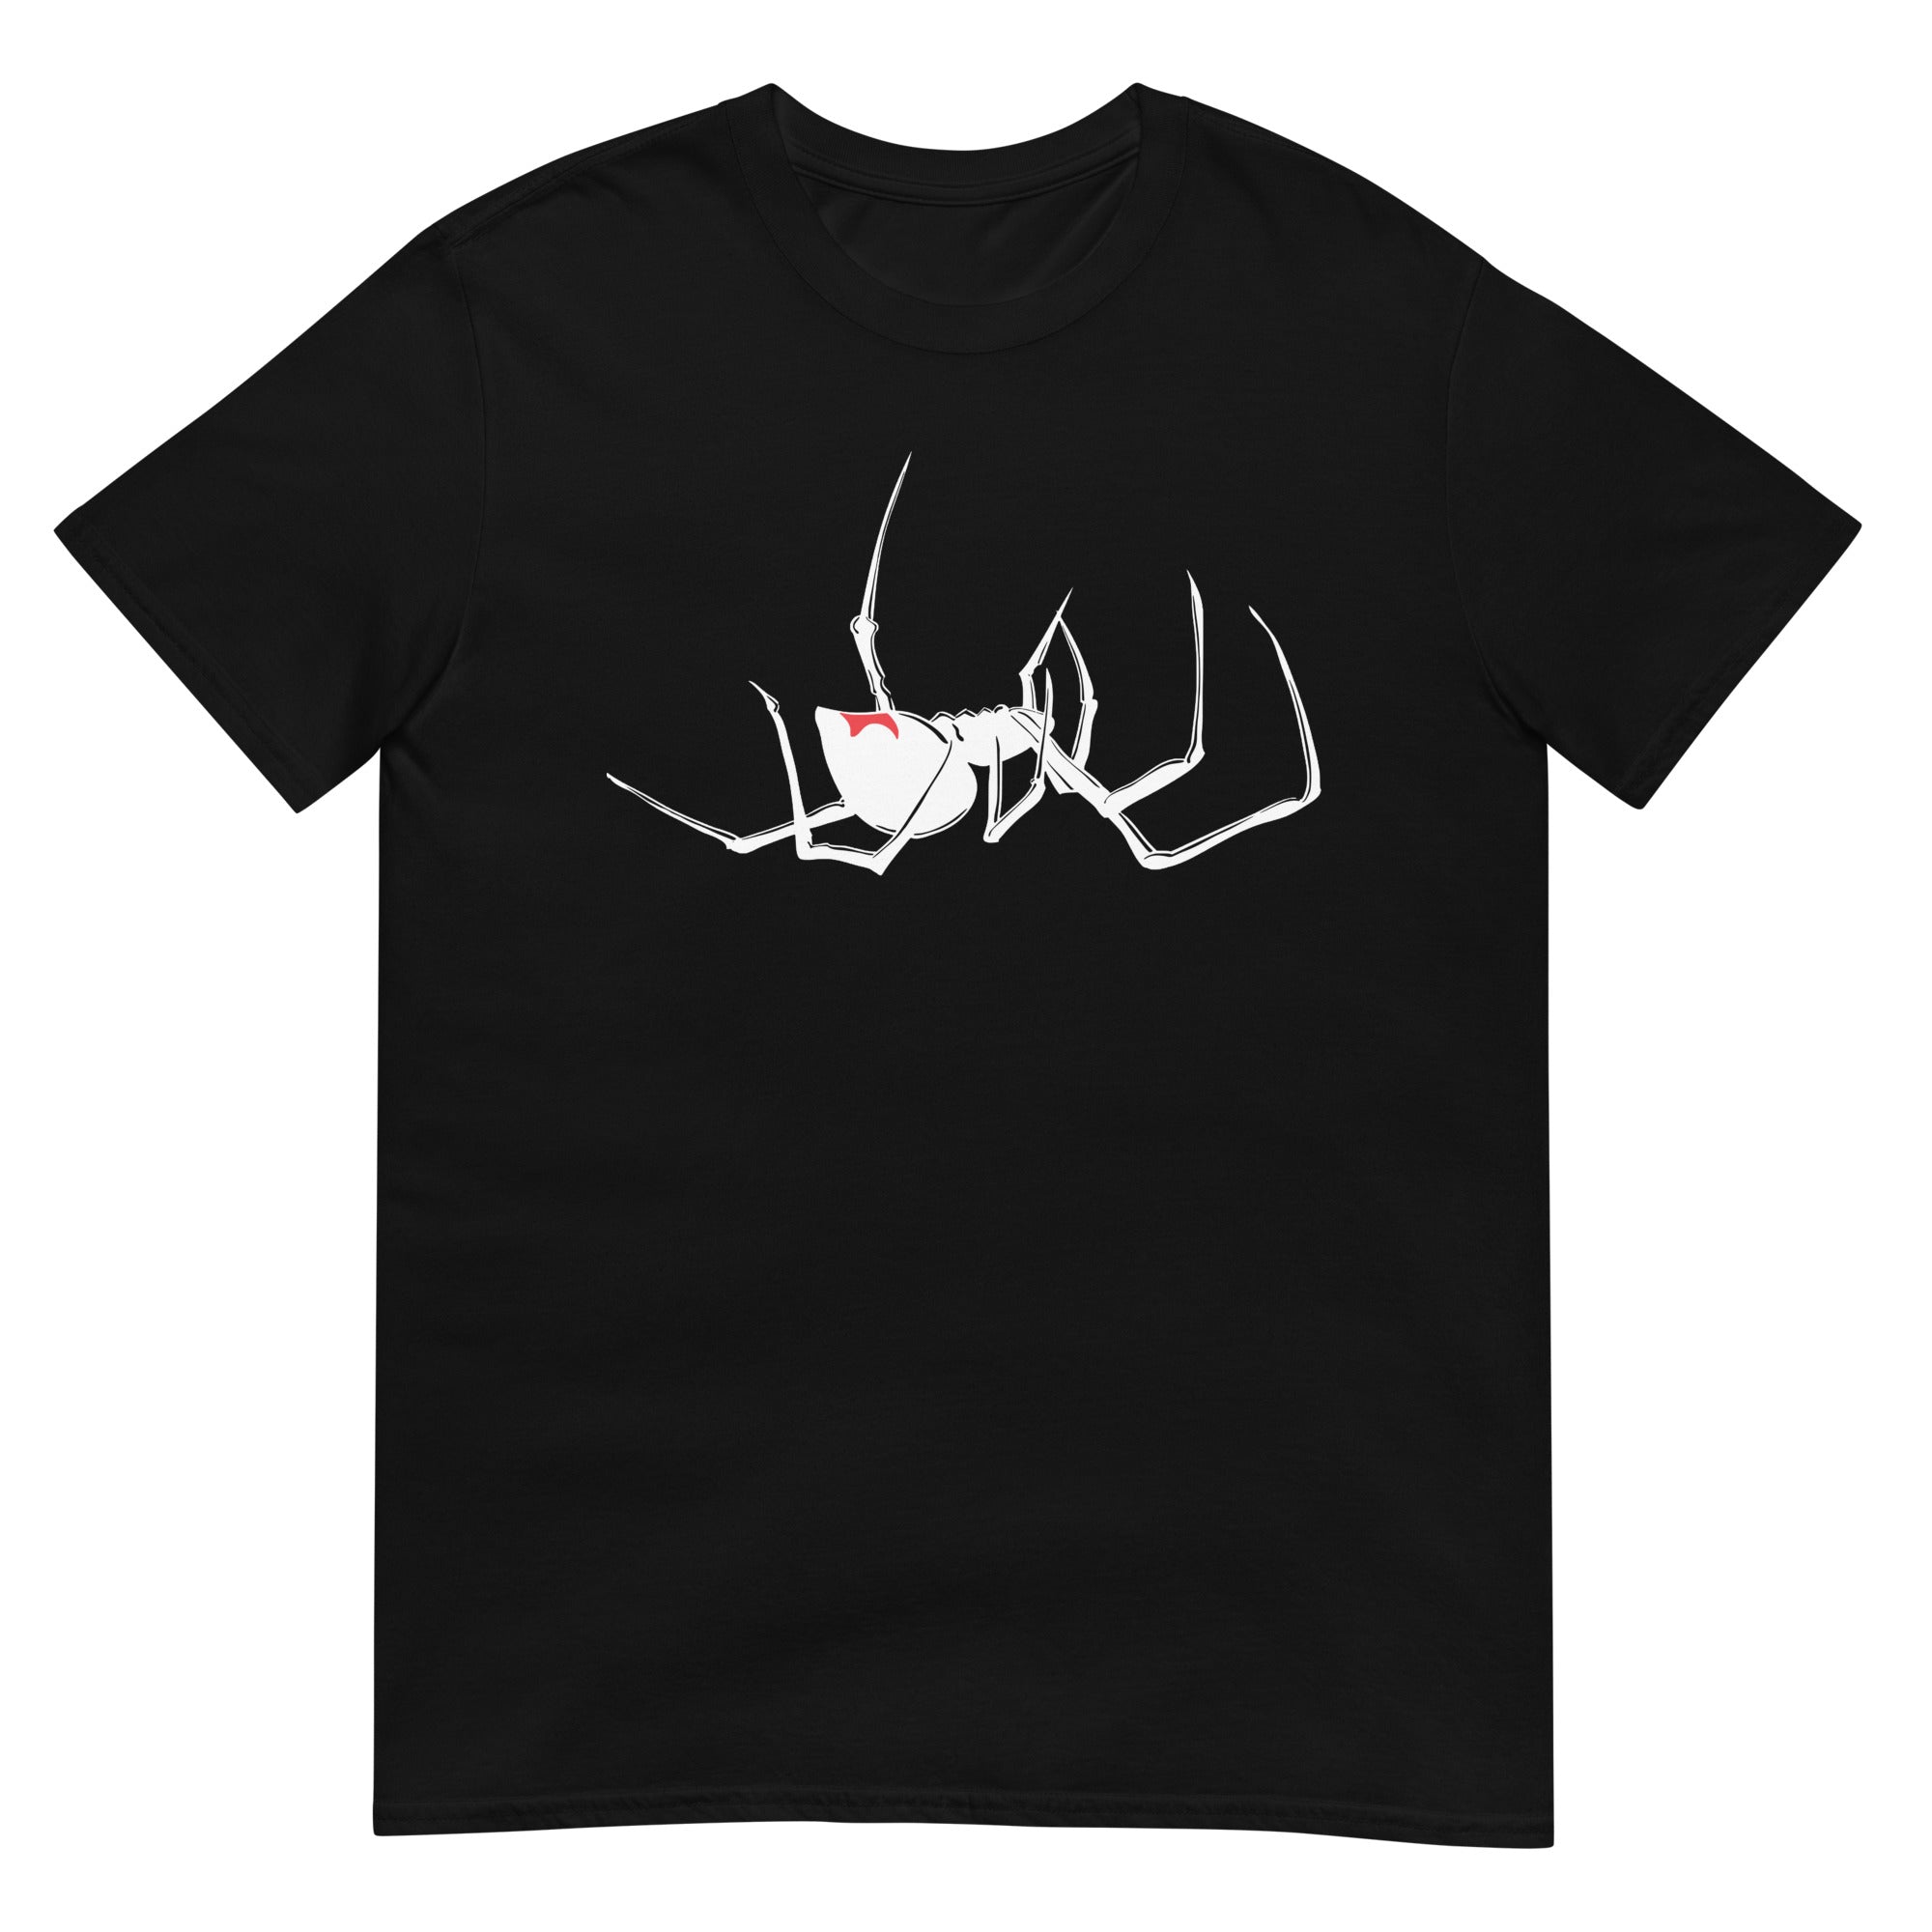 Latrodectus Black Widow Spider Arachnid Men's Short-Sleeve T-Shirt - Edge of Life Designs